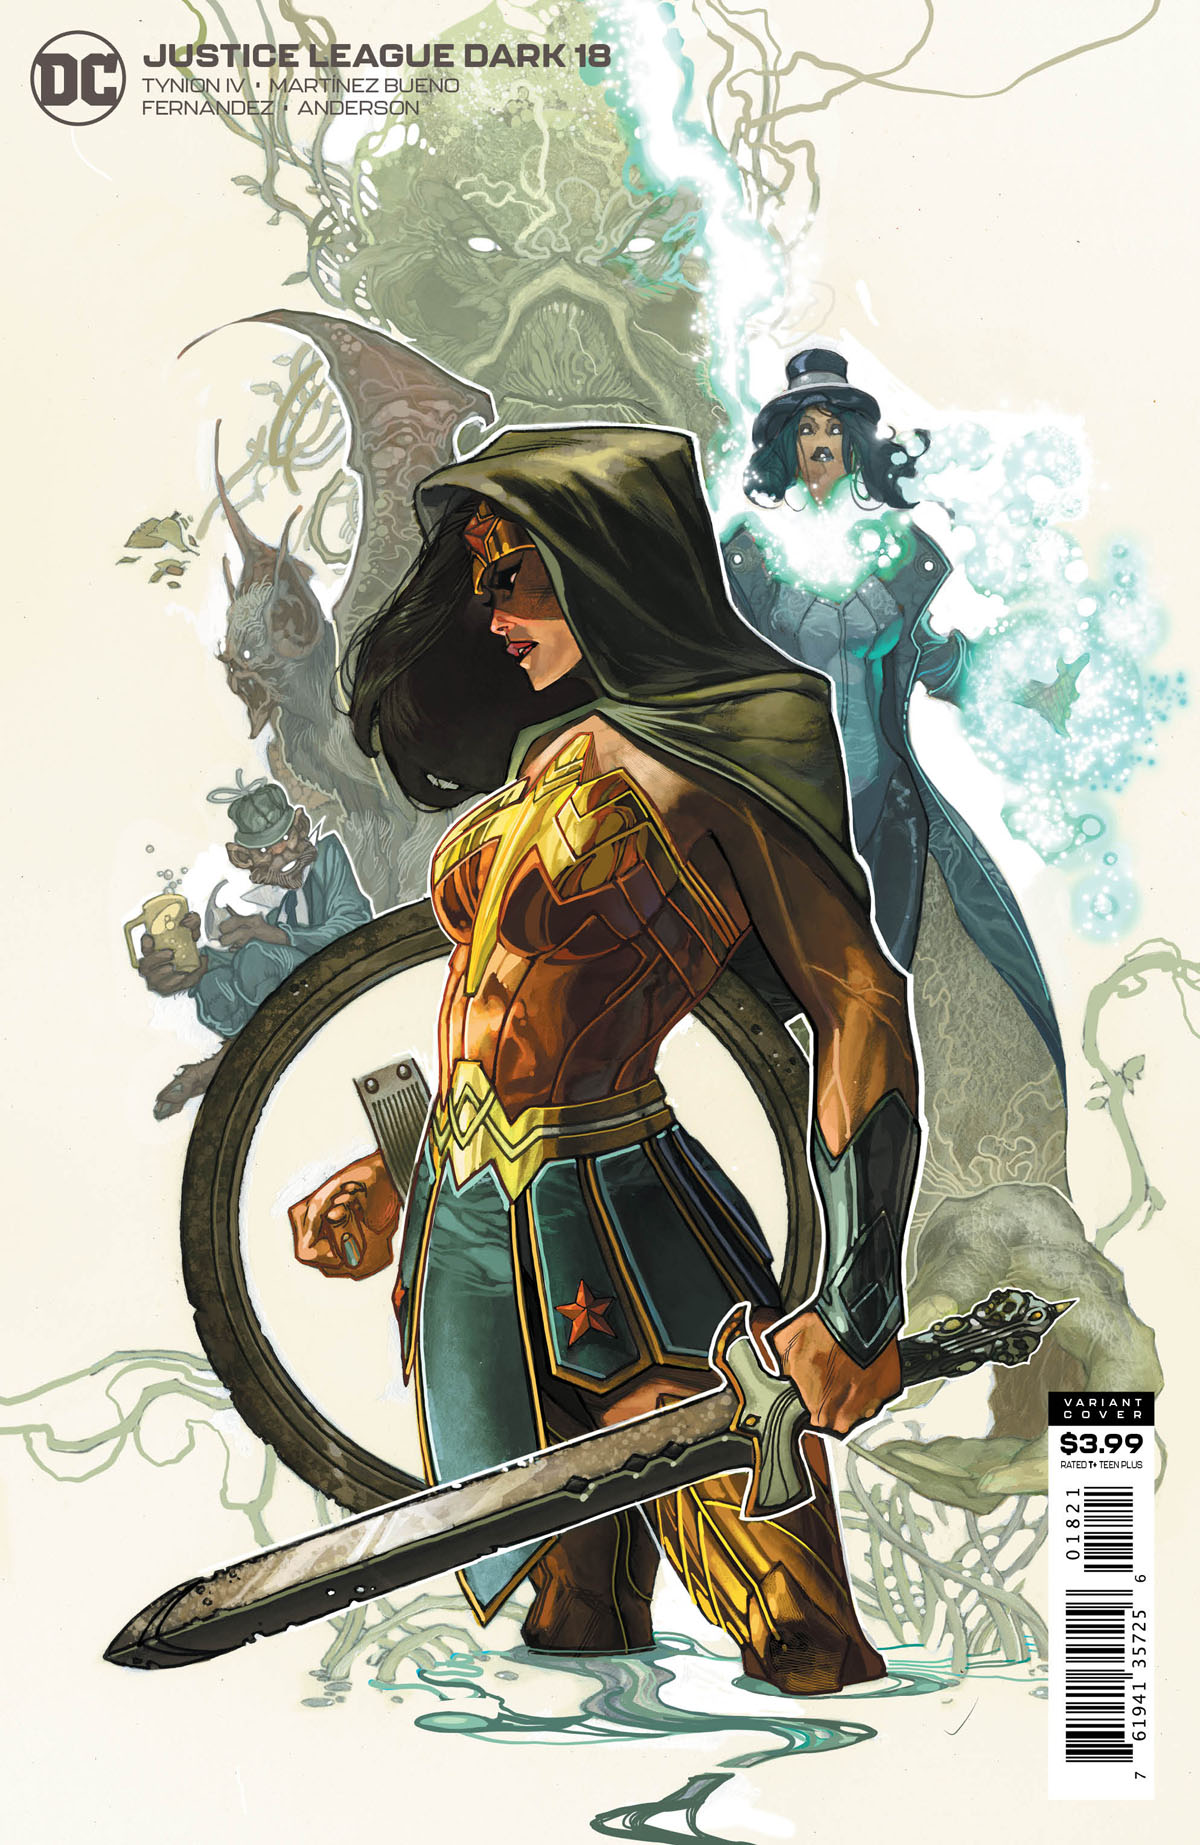 Justice League Dark #18 variant cover